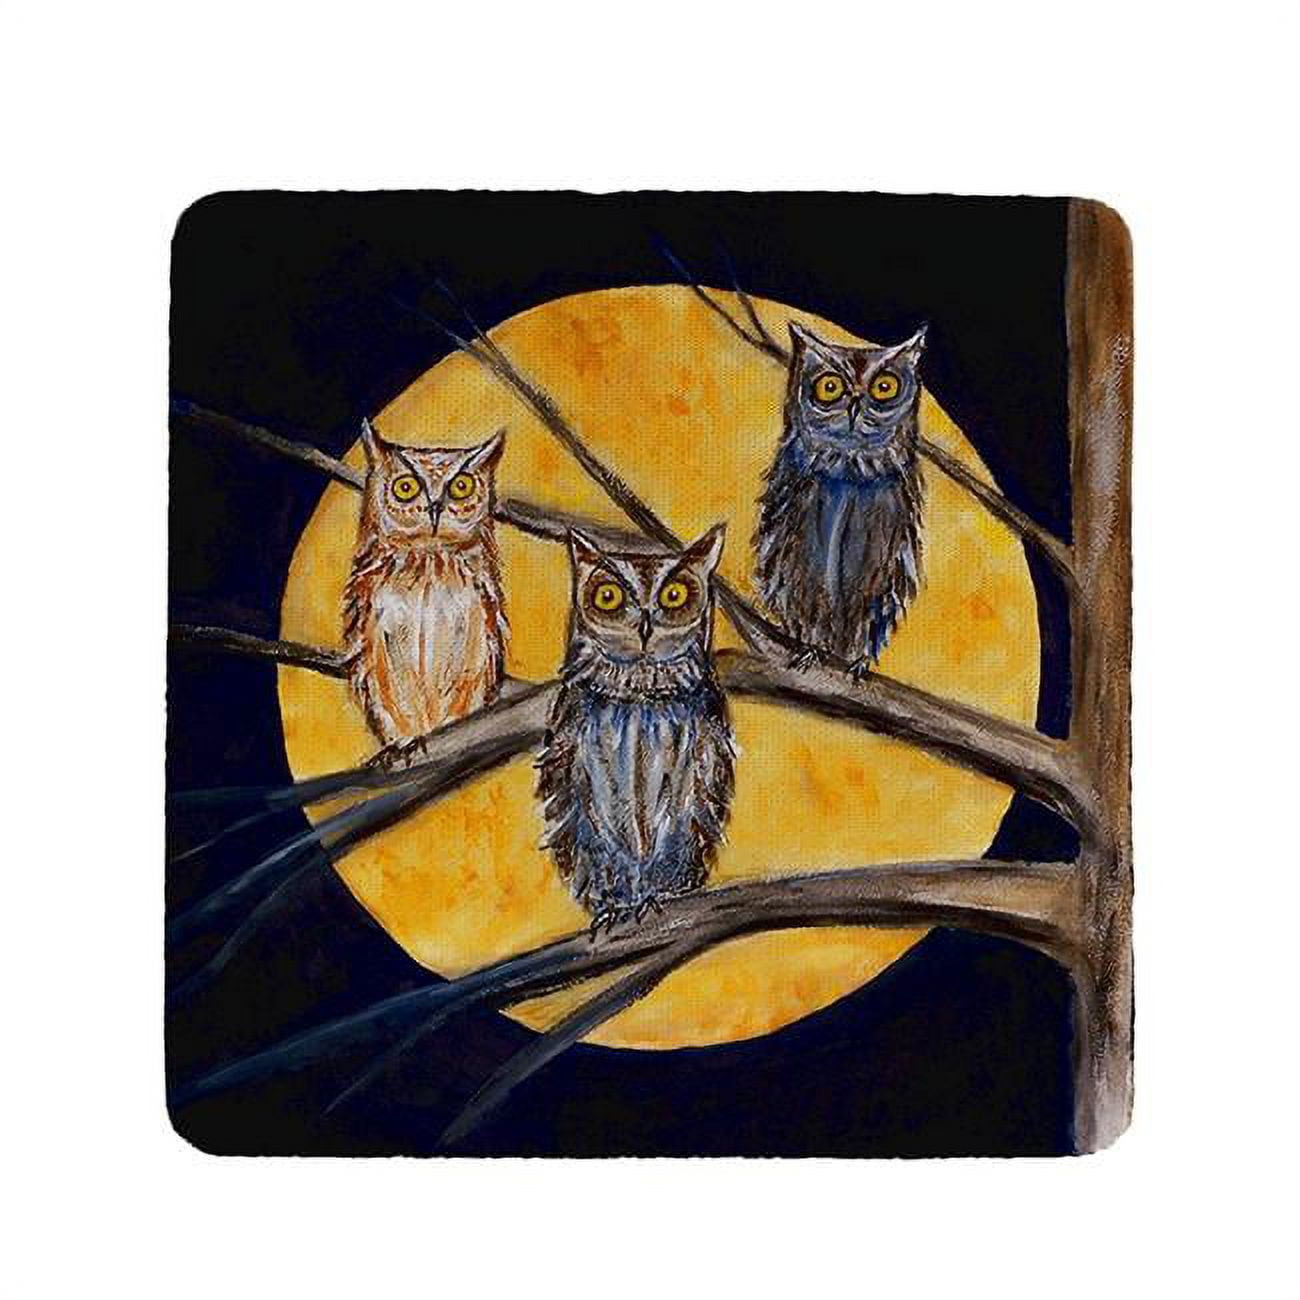 Ct248 Night Owls Coaster - Set Of 4